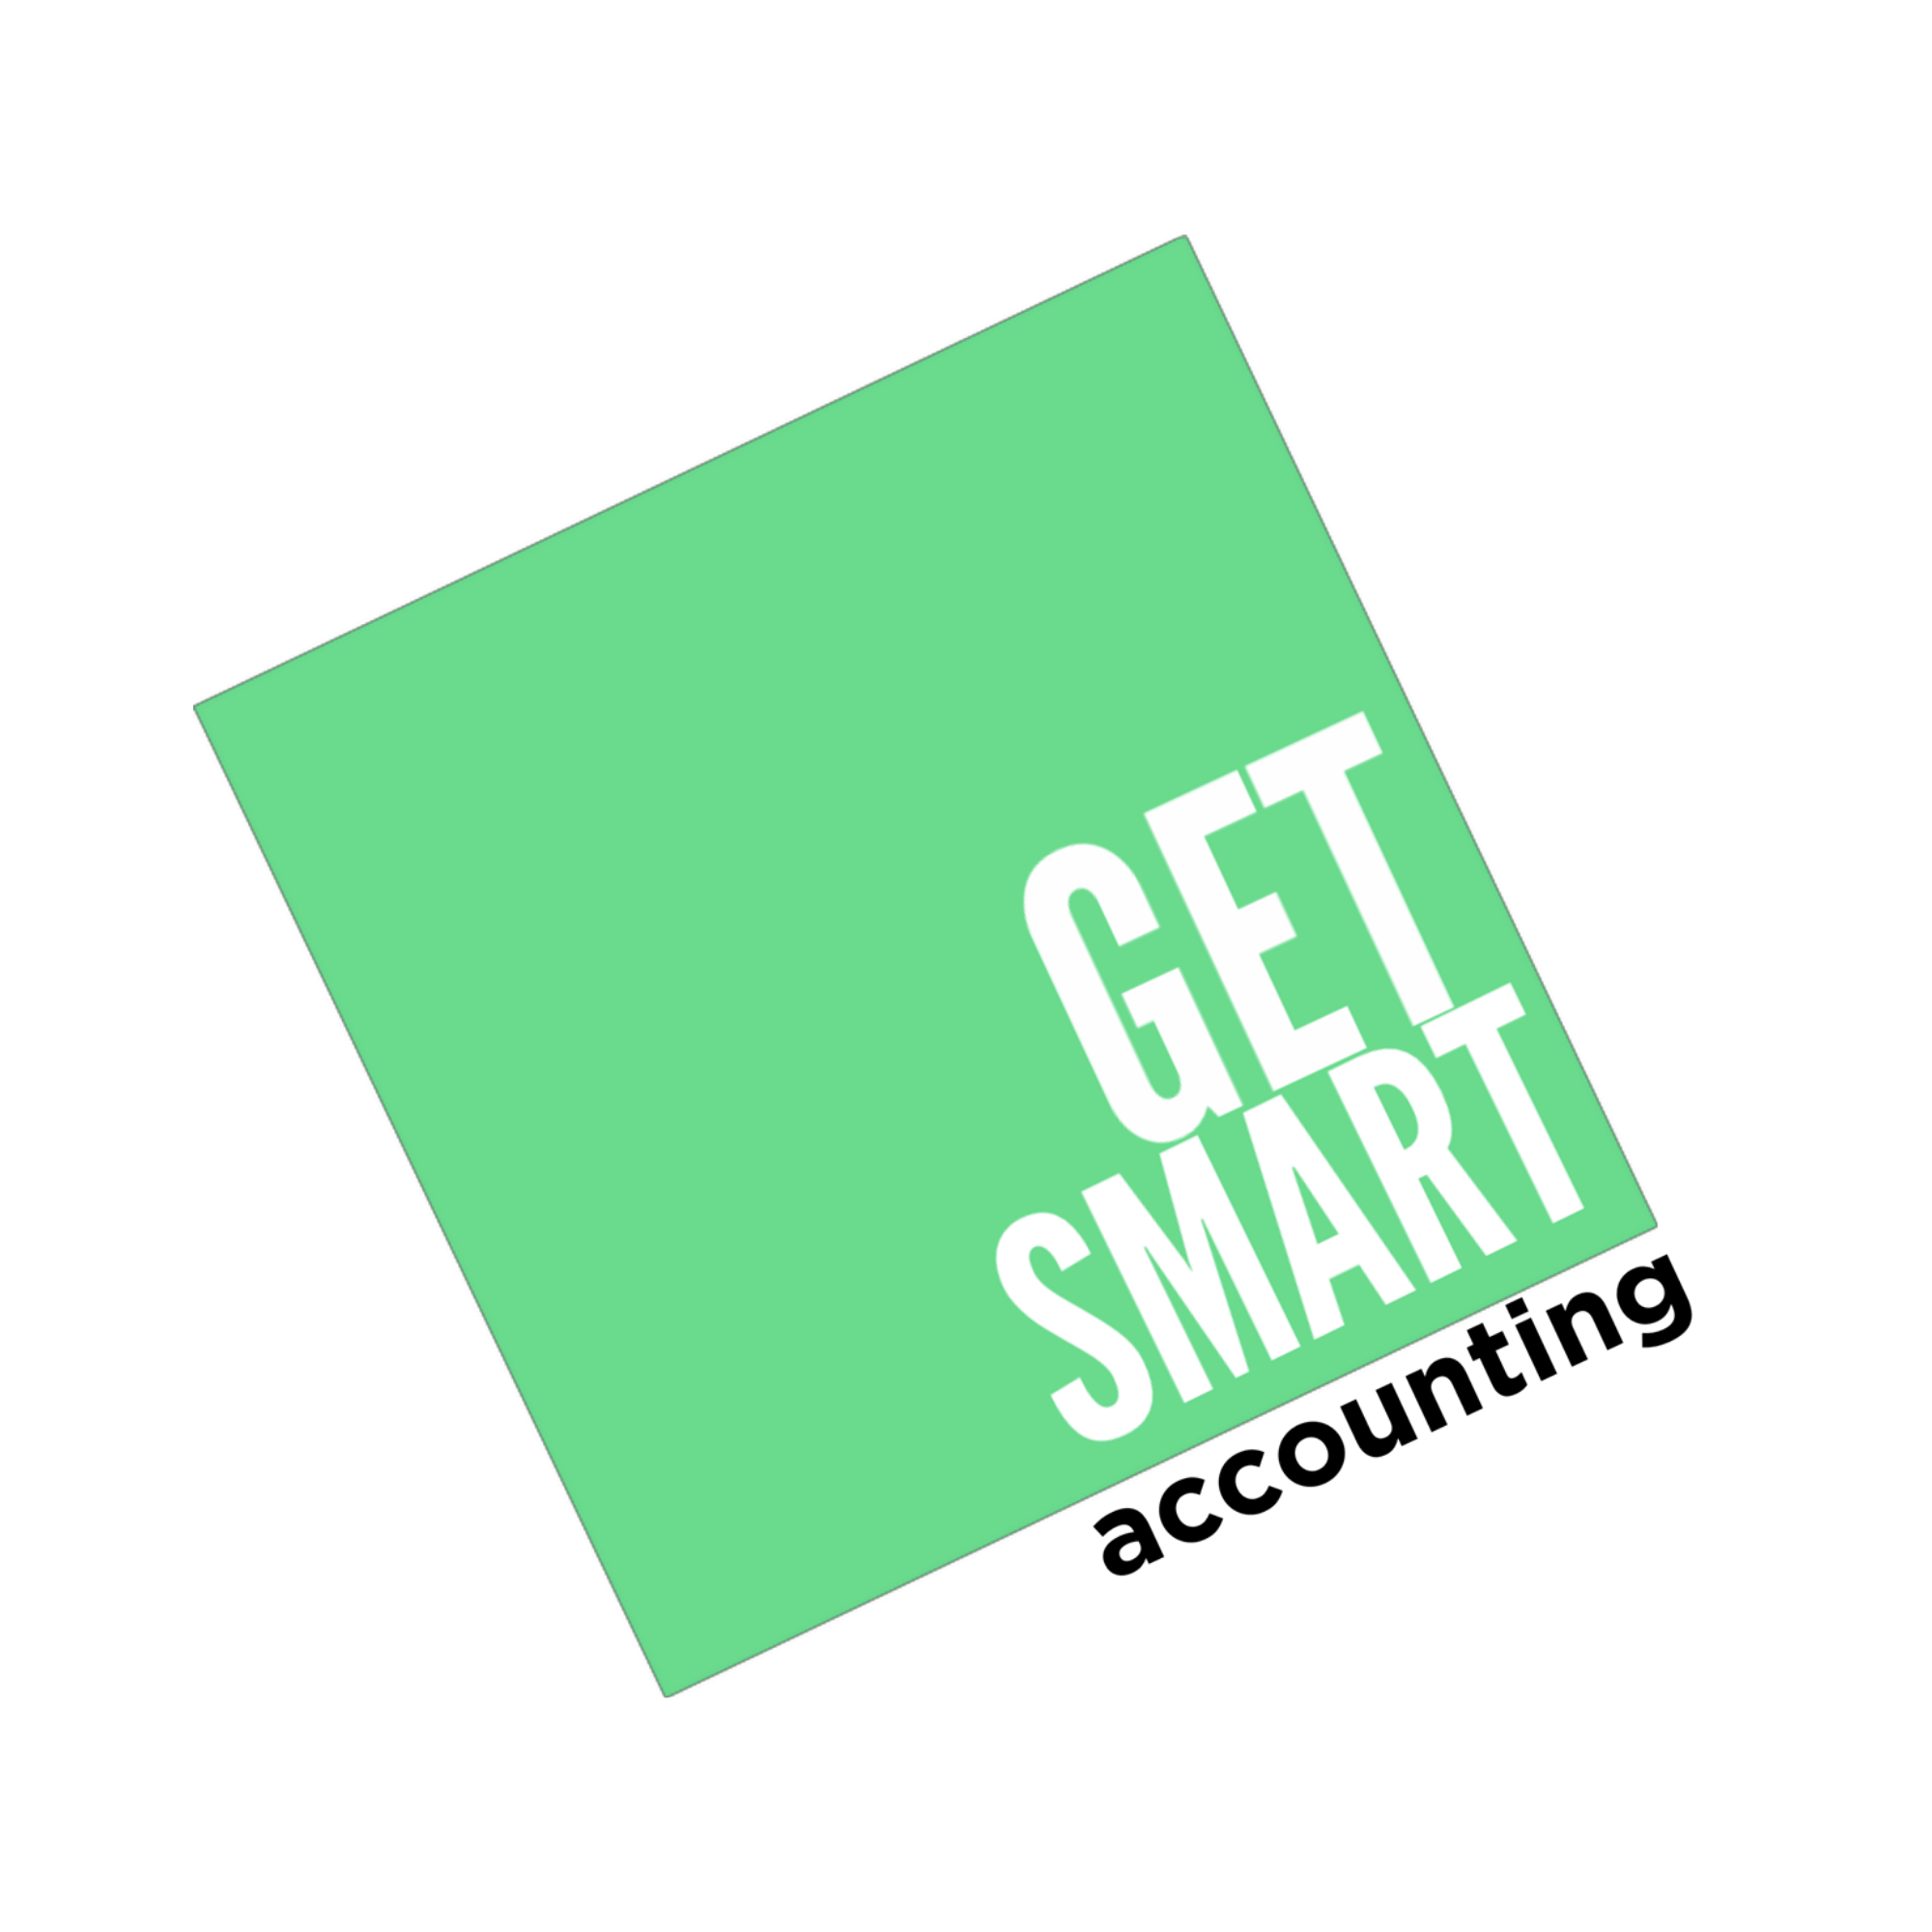 Get smart accounting logo